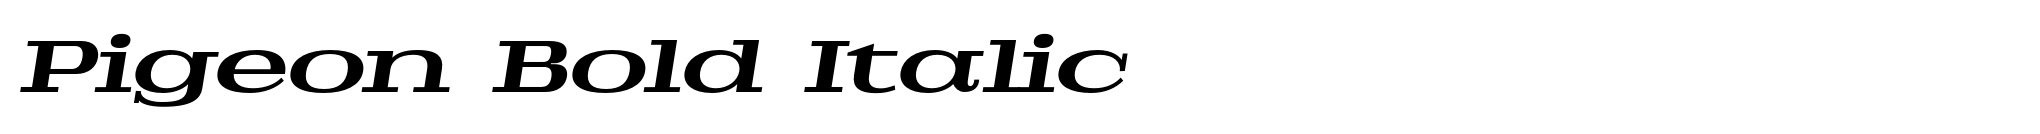 Pigeon Bold Italic image